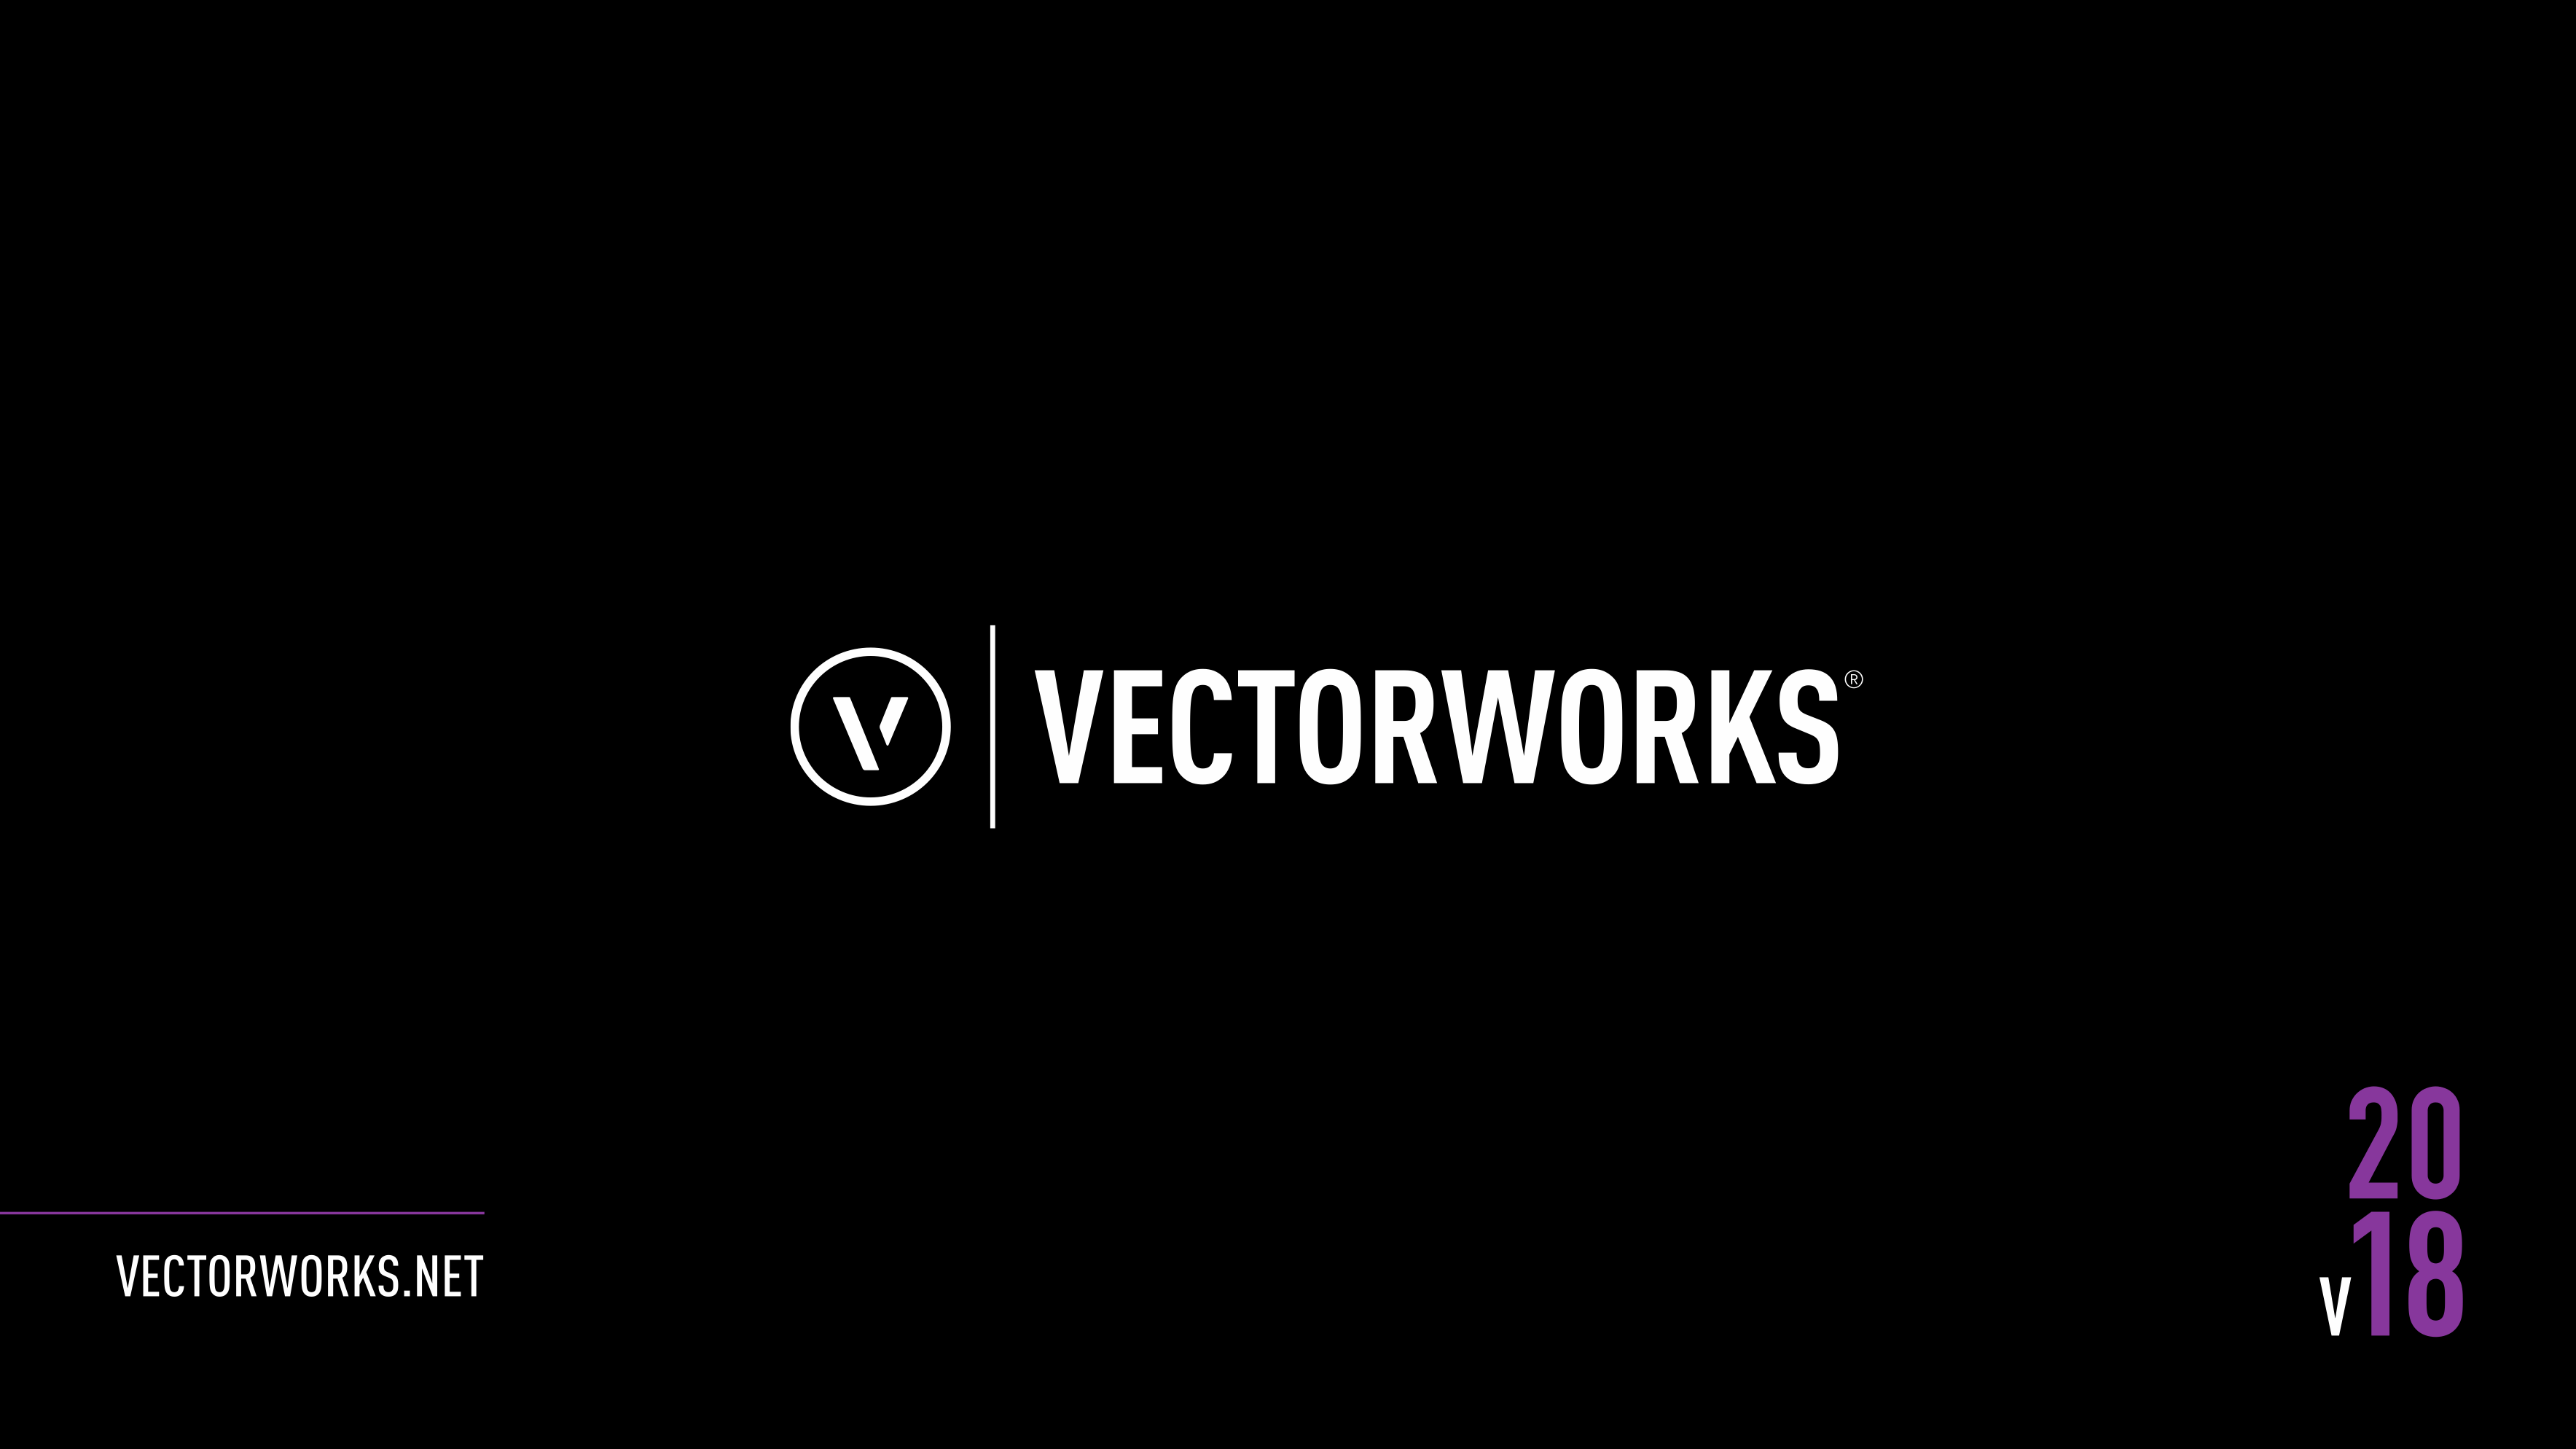 Vectorworks Logo - Vectorworks 2018 Getting Started Guides | Online Training | Vectorworks